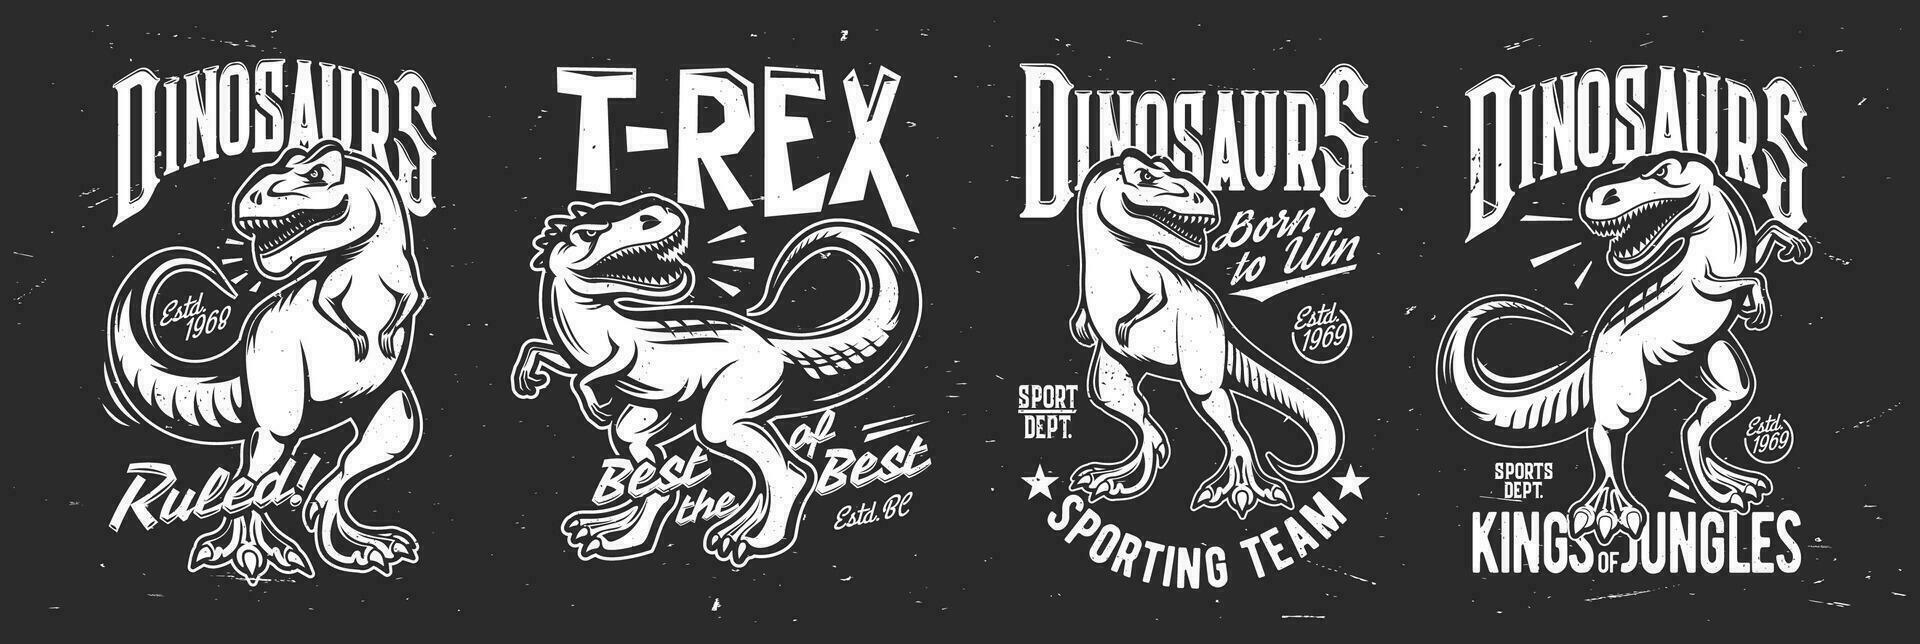 Tyrannosaurus rex, T-rex dinosaur, t-shirt print vector